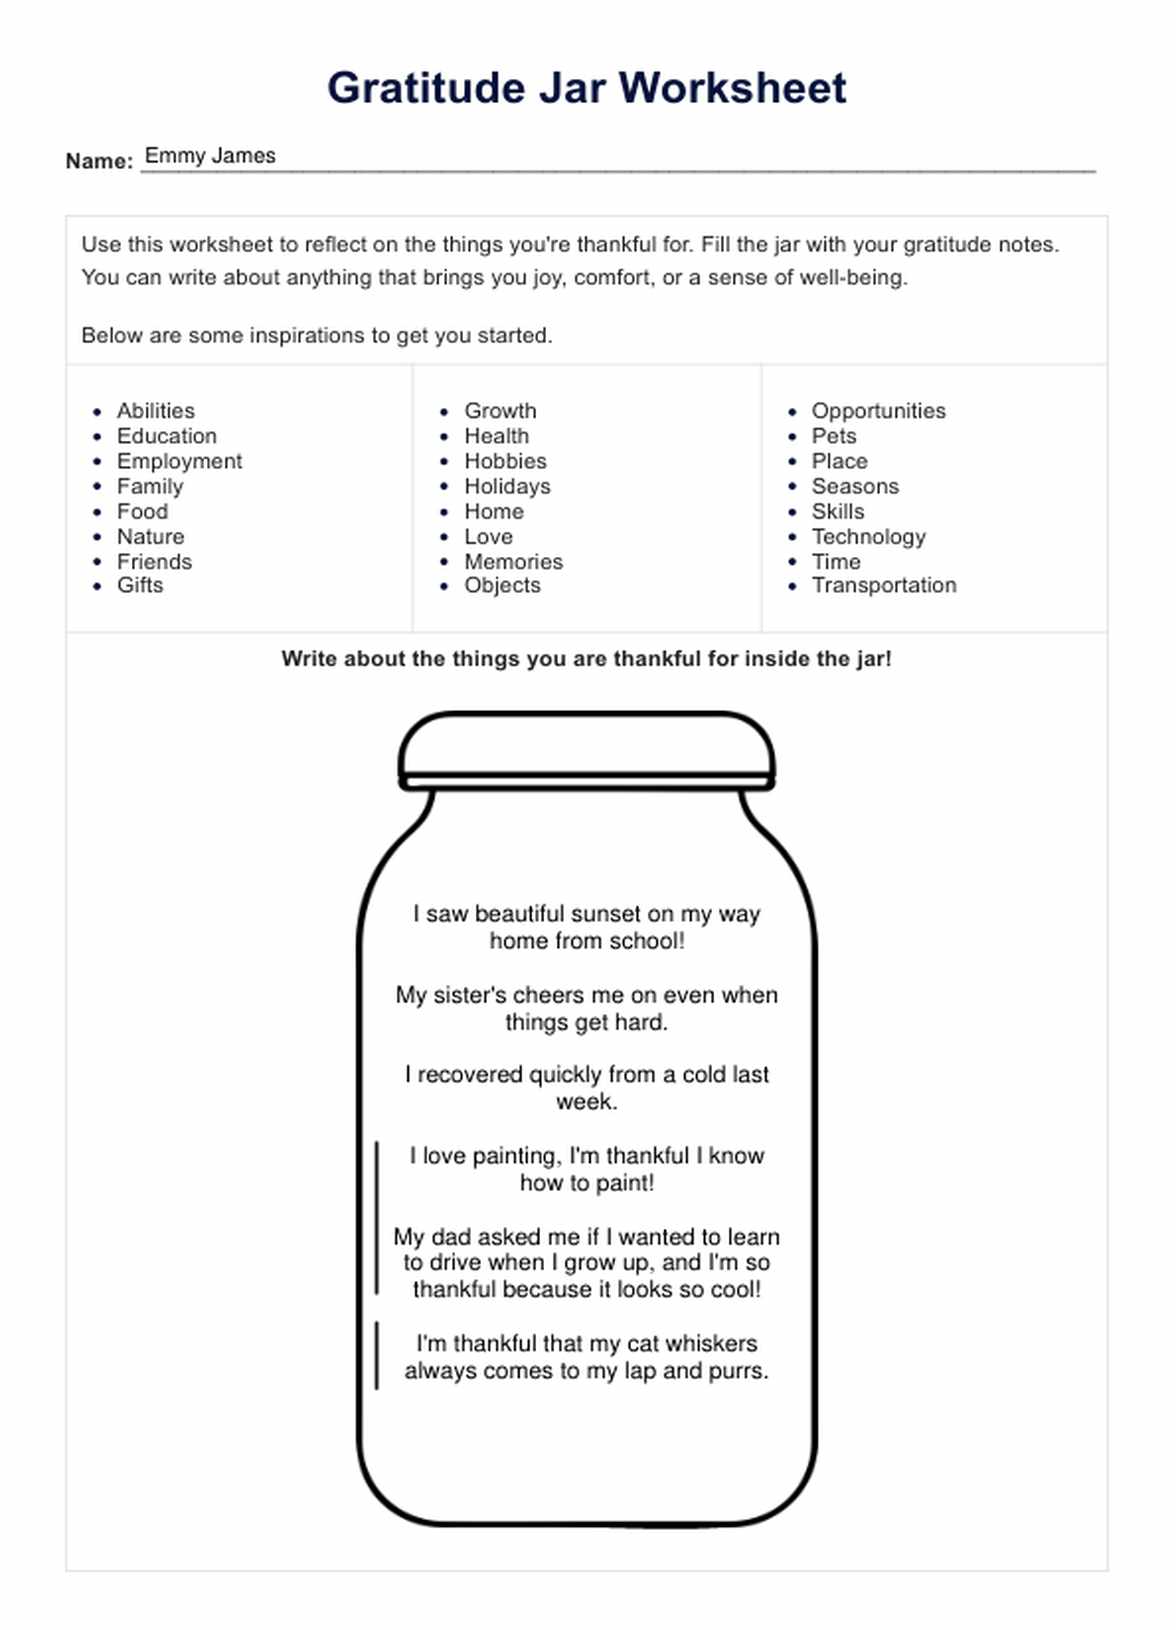 Gratitude Jar Worksheet PDF Example